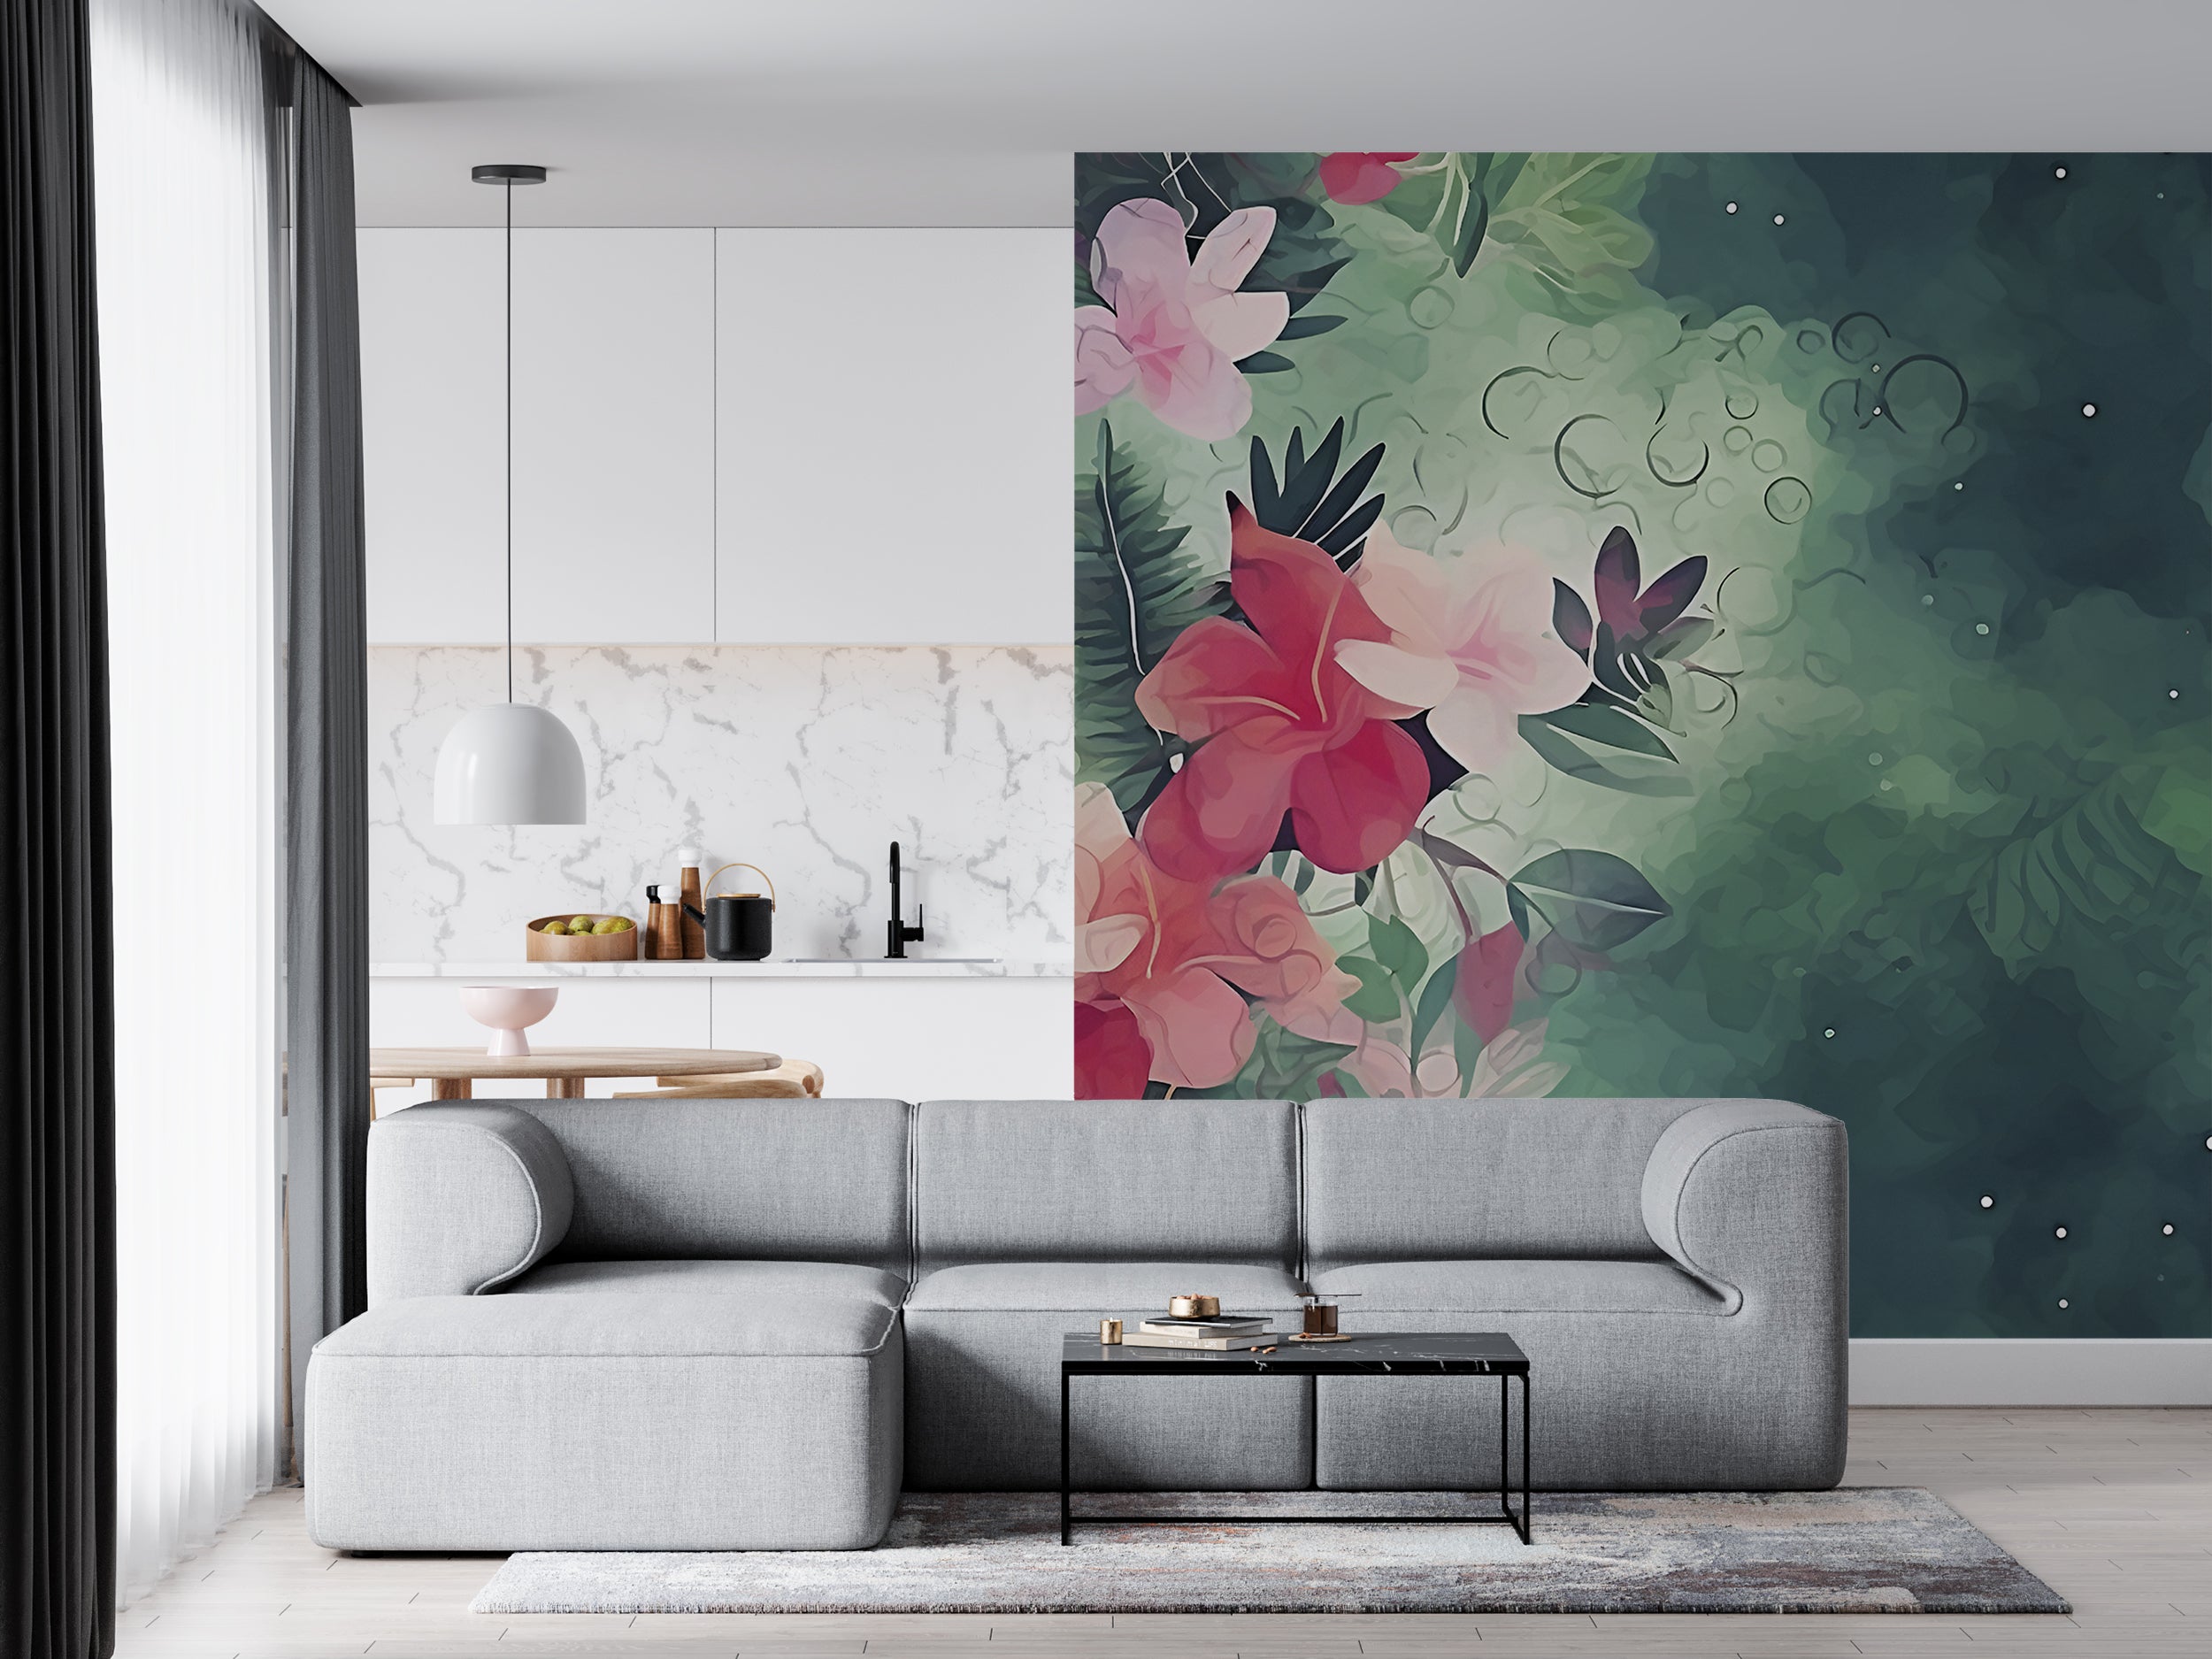 Calm Interior Decor with Green Floral Wallpaper